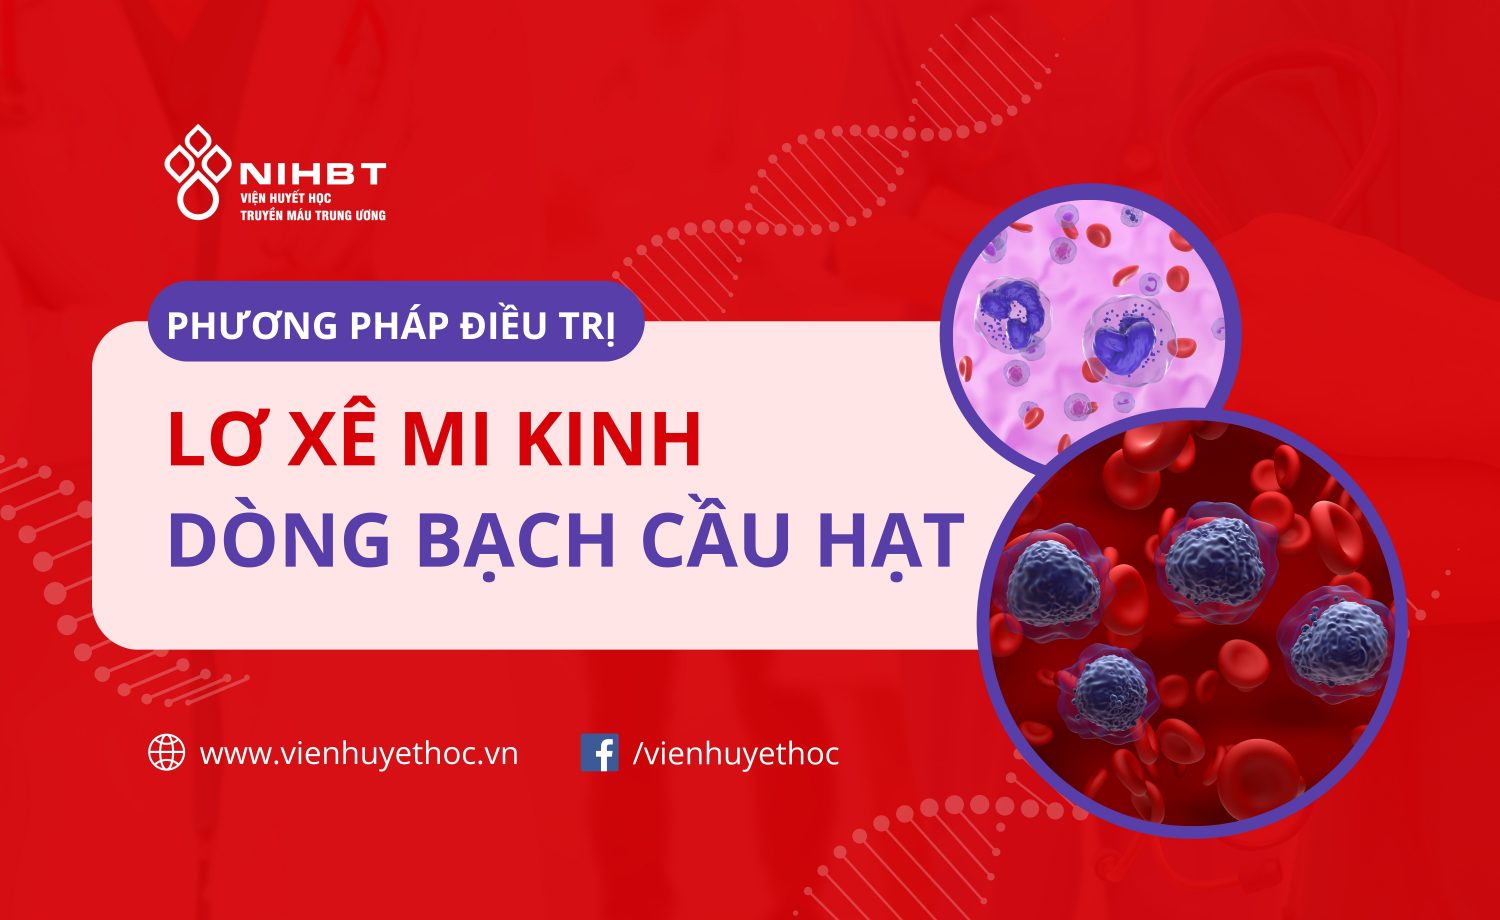 Phuong phap dieu tri lo xe mi kinh dong bach cau hat (2)